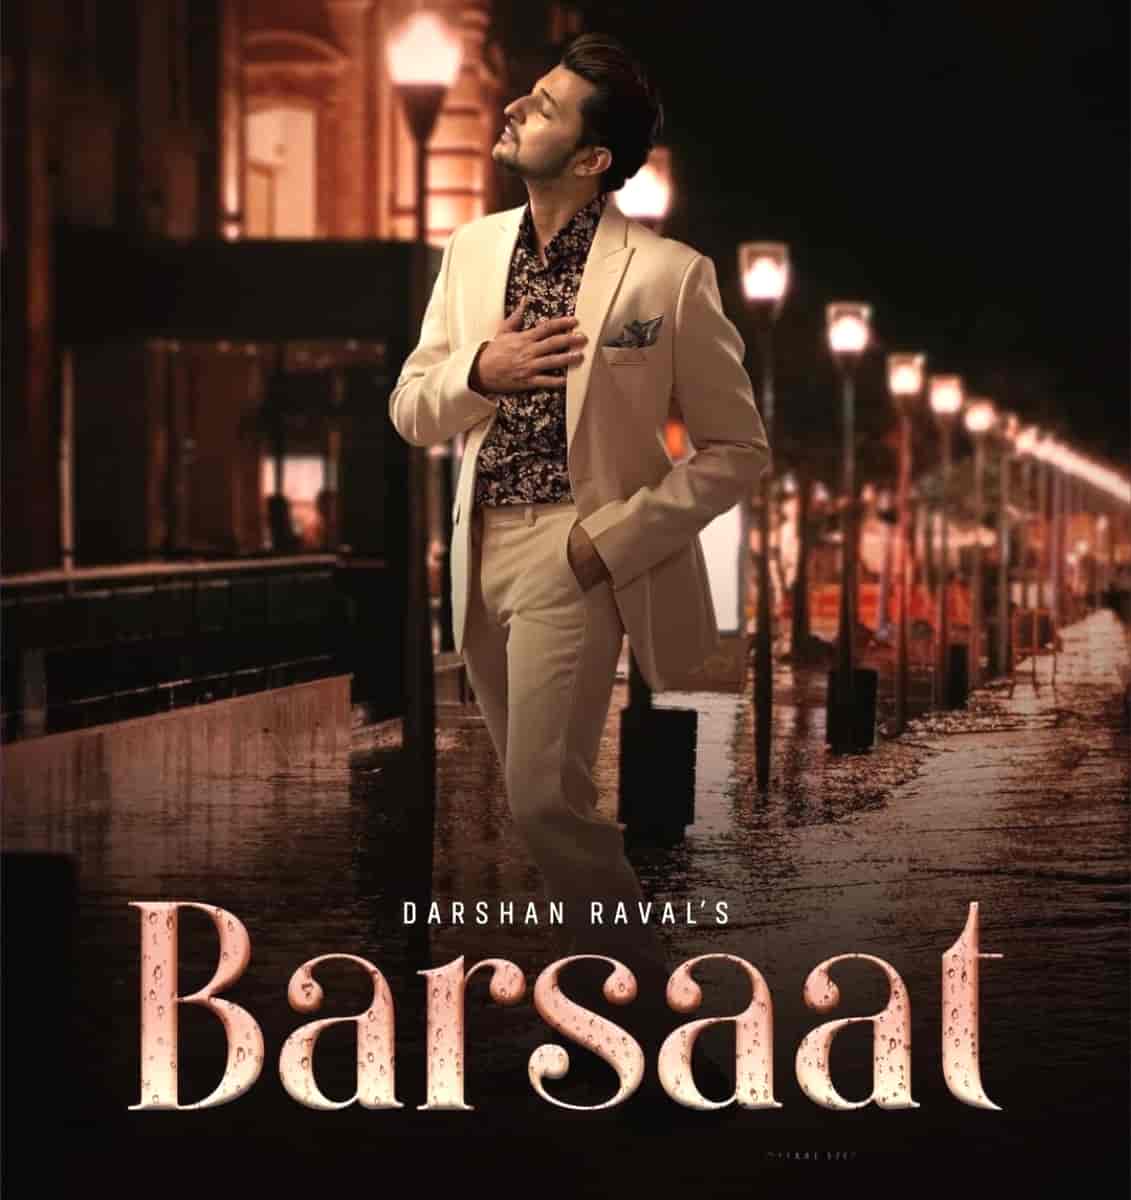 Barsaat Hindi Song Image Features Darshan Raval